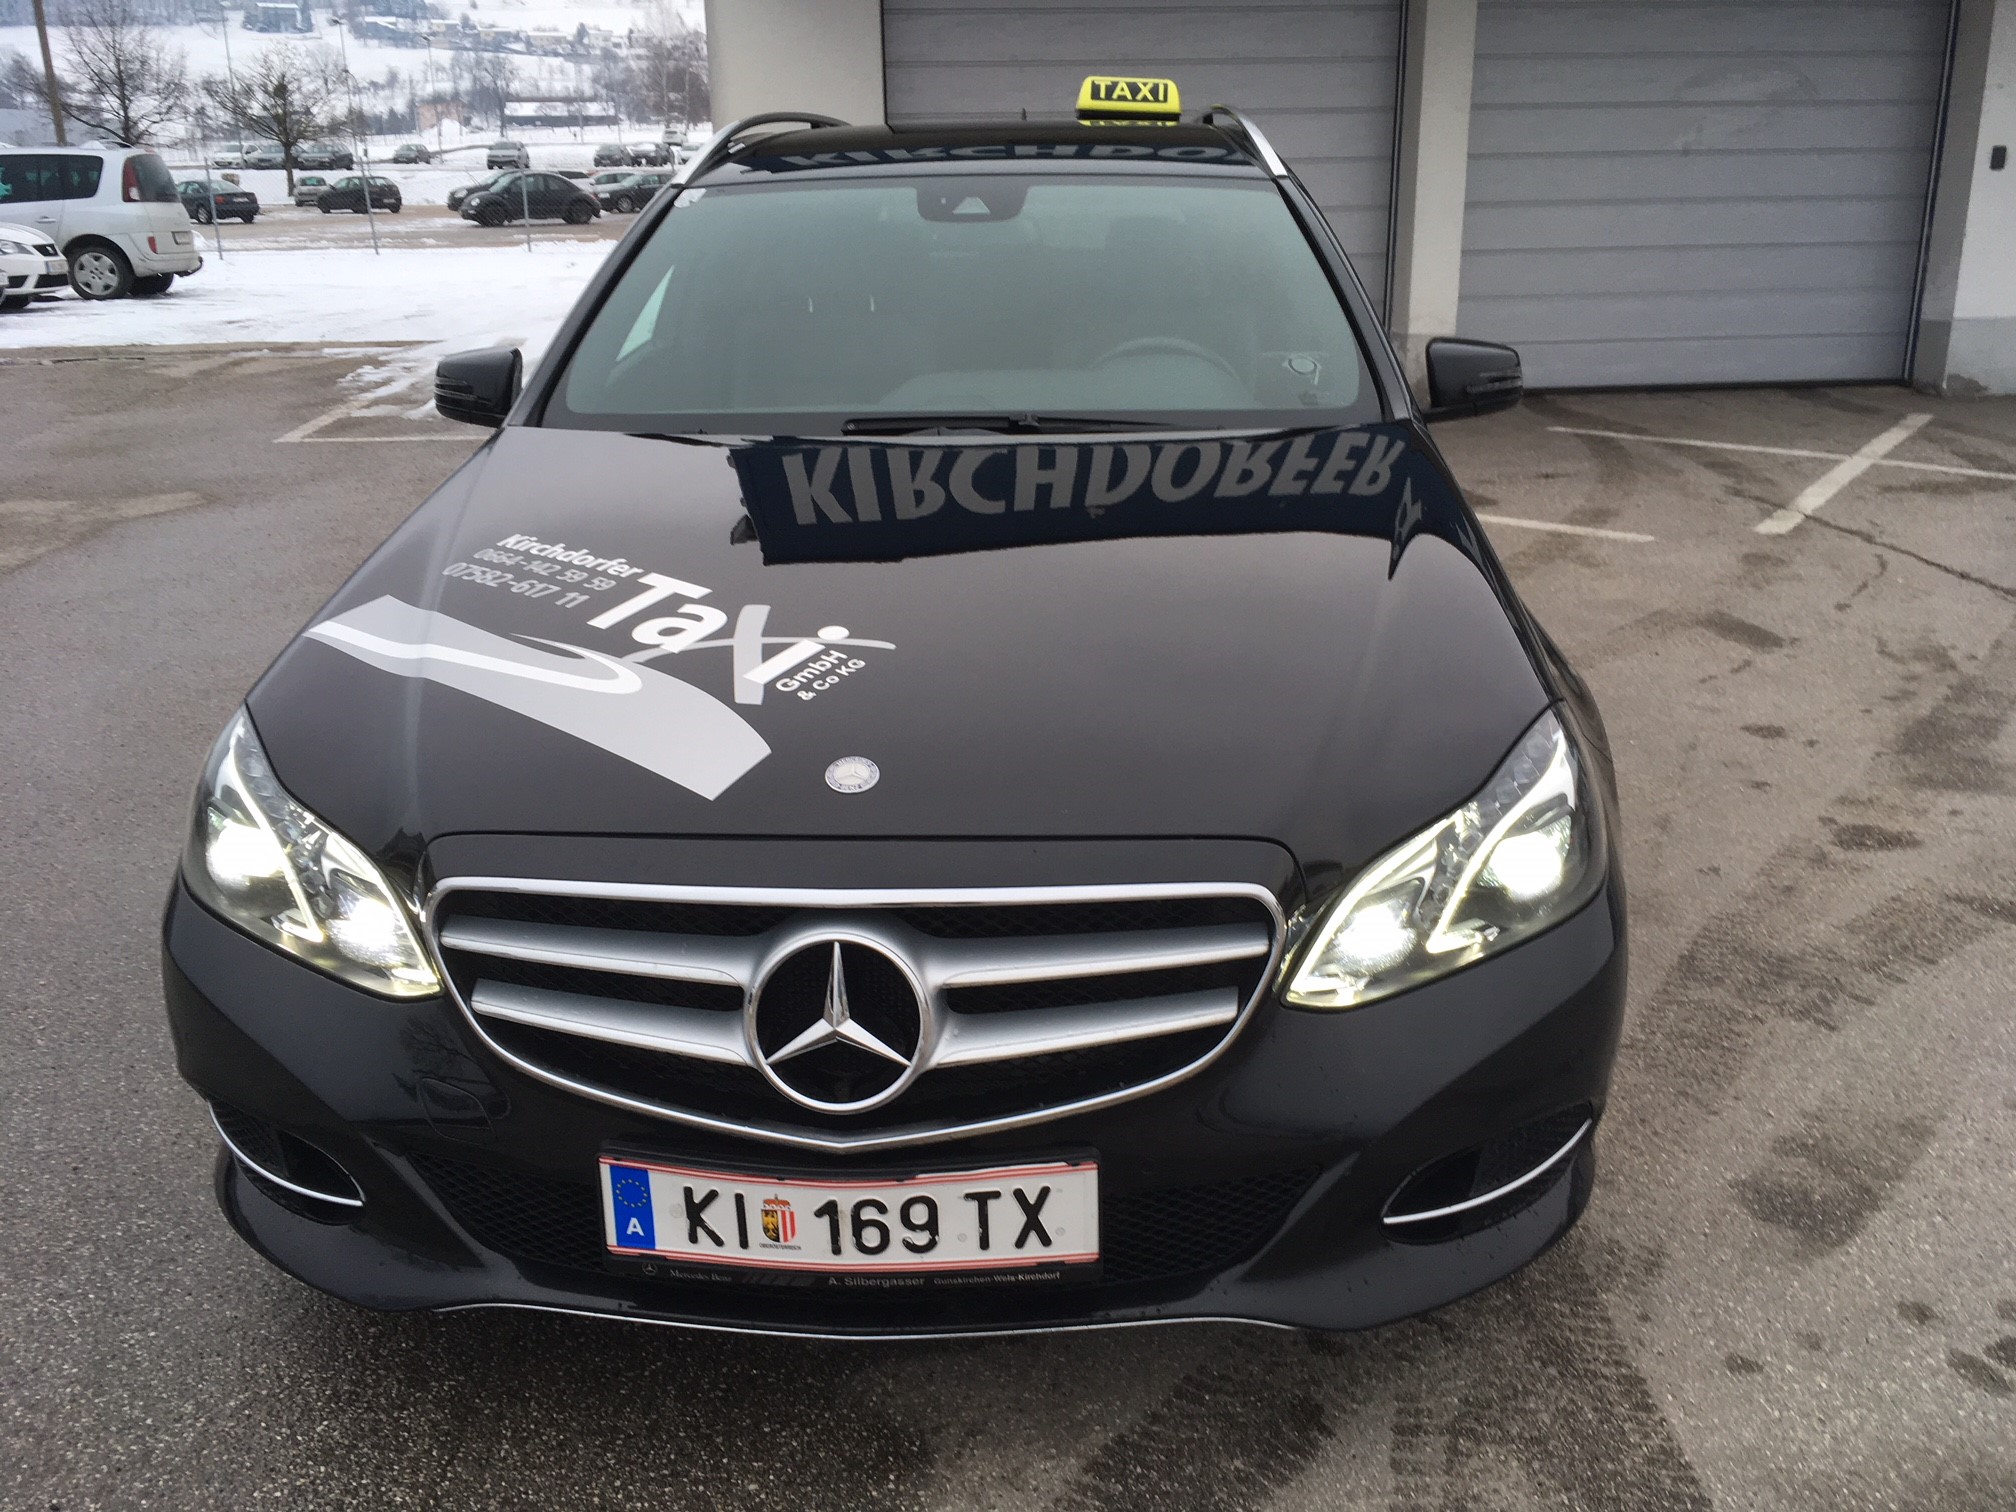 Bilder Kirchdorfer Taxi GmbH & Co KG